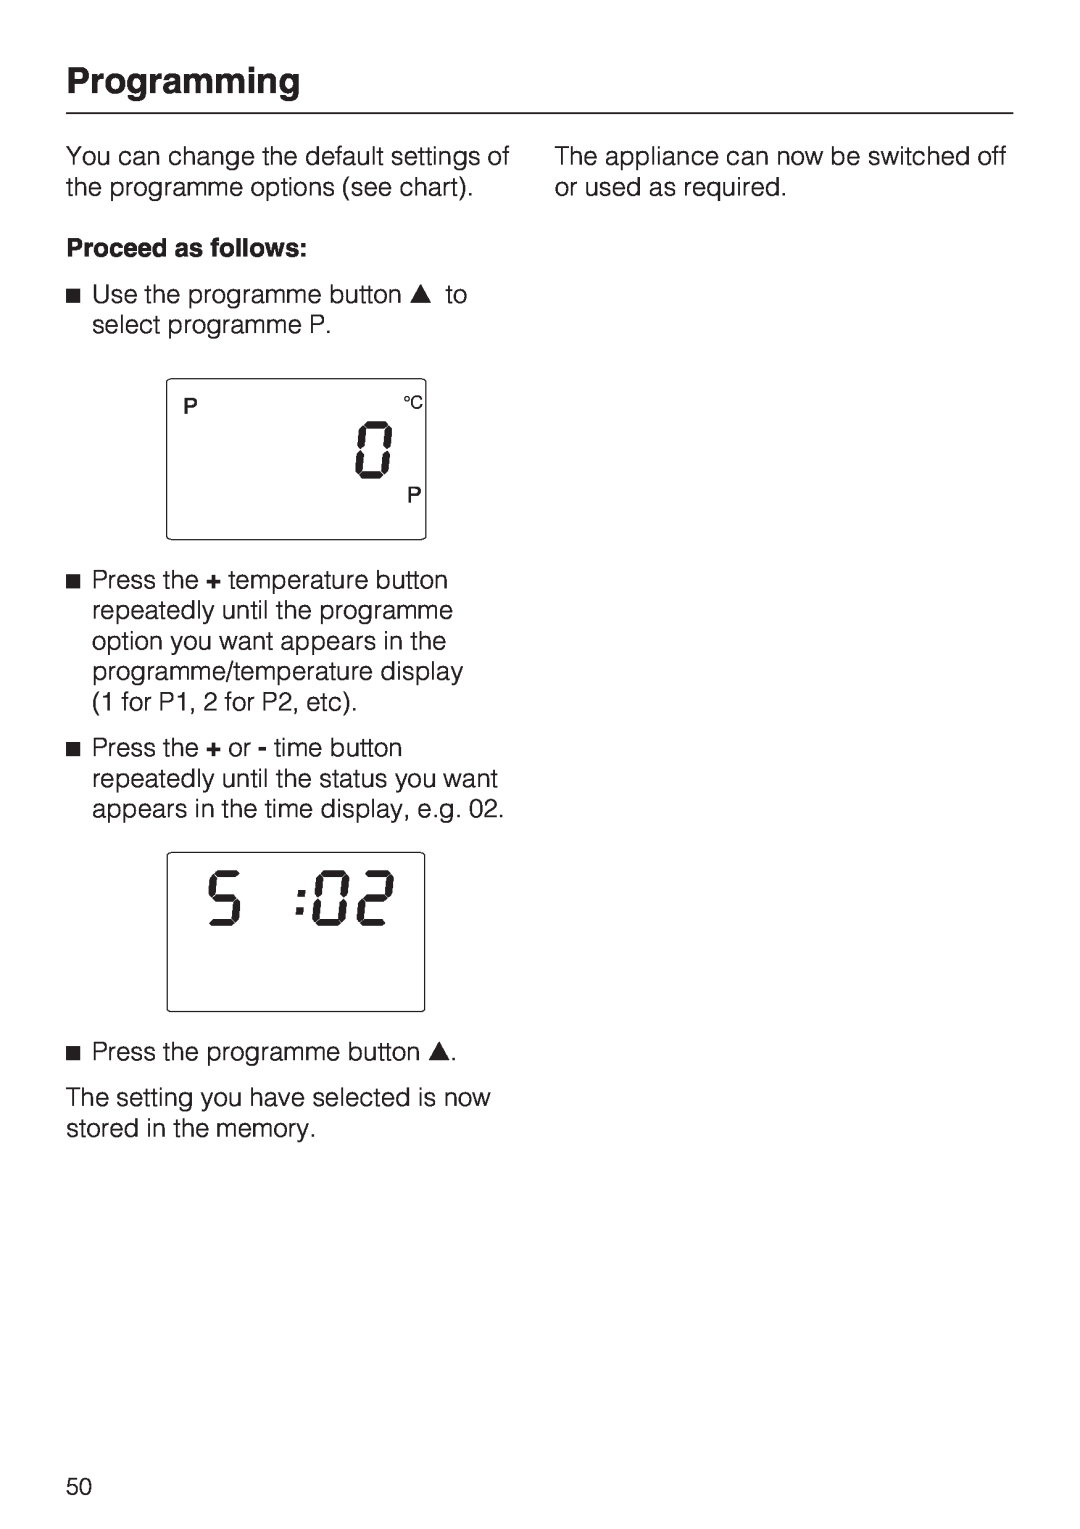 Miele DG 4164 L, DG 4064 L Programming, Proceed as follows, Use the programme button to select programme P 